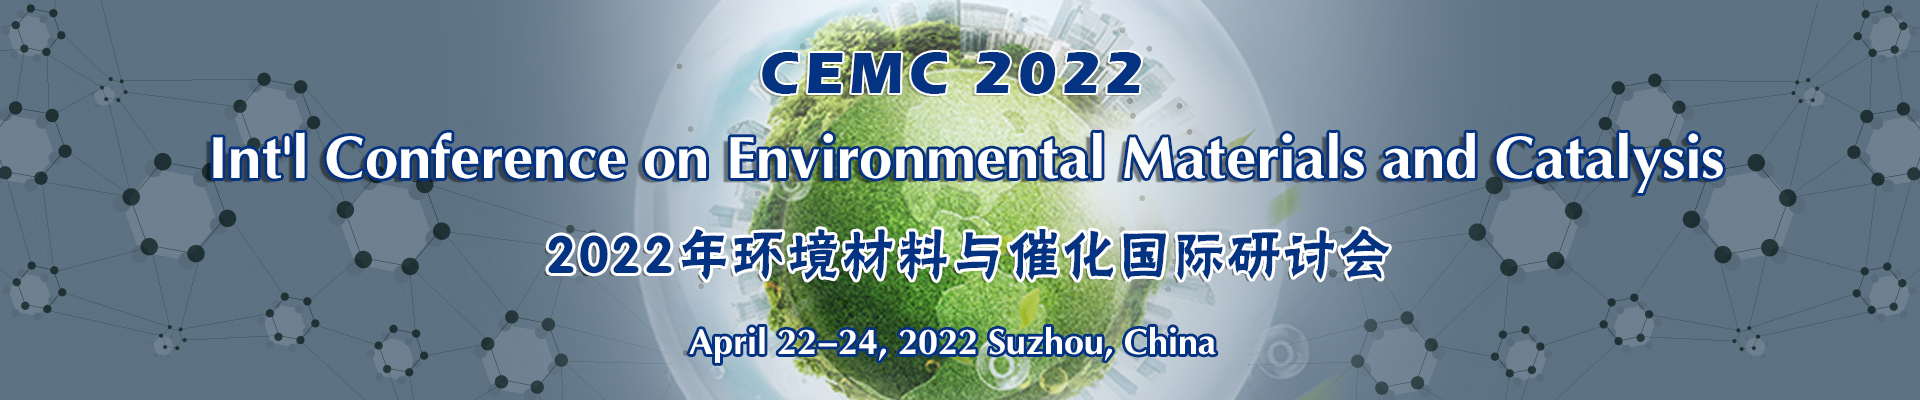 Int'l Conference on Environmental Materials and Catalysis (CEMC 2022), Suzhou, Jiangsu, China